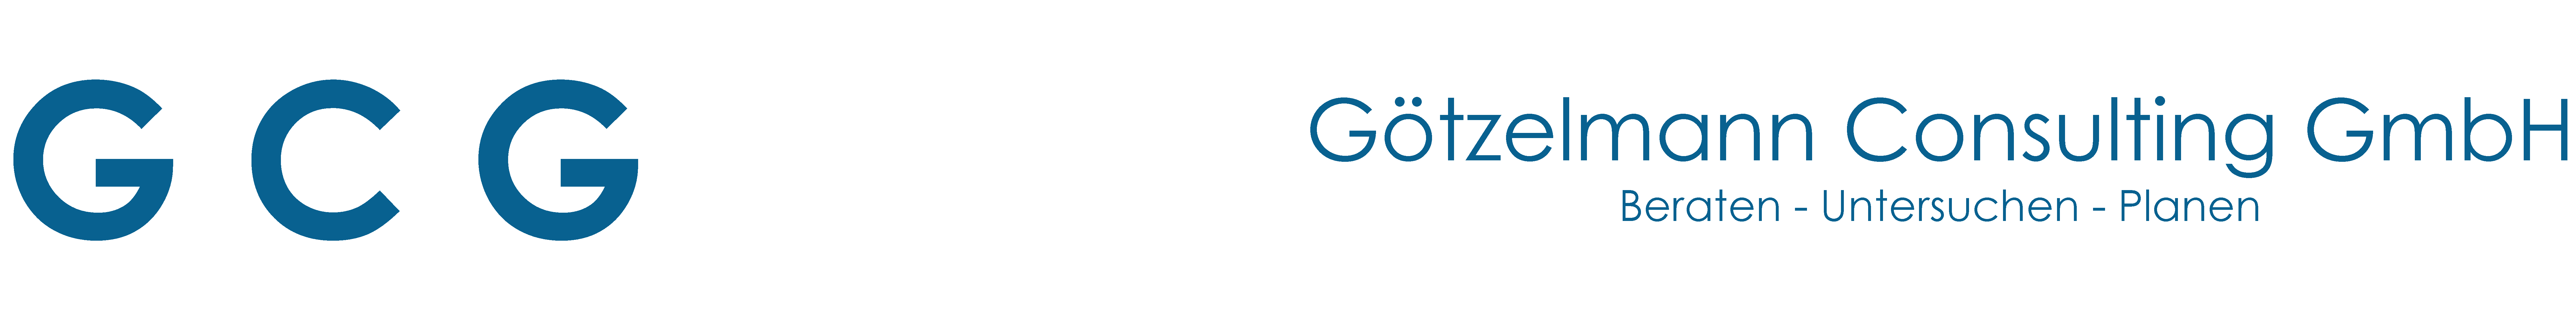 Götzelmann Consulting GmbH Logo